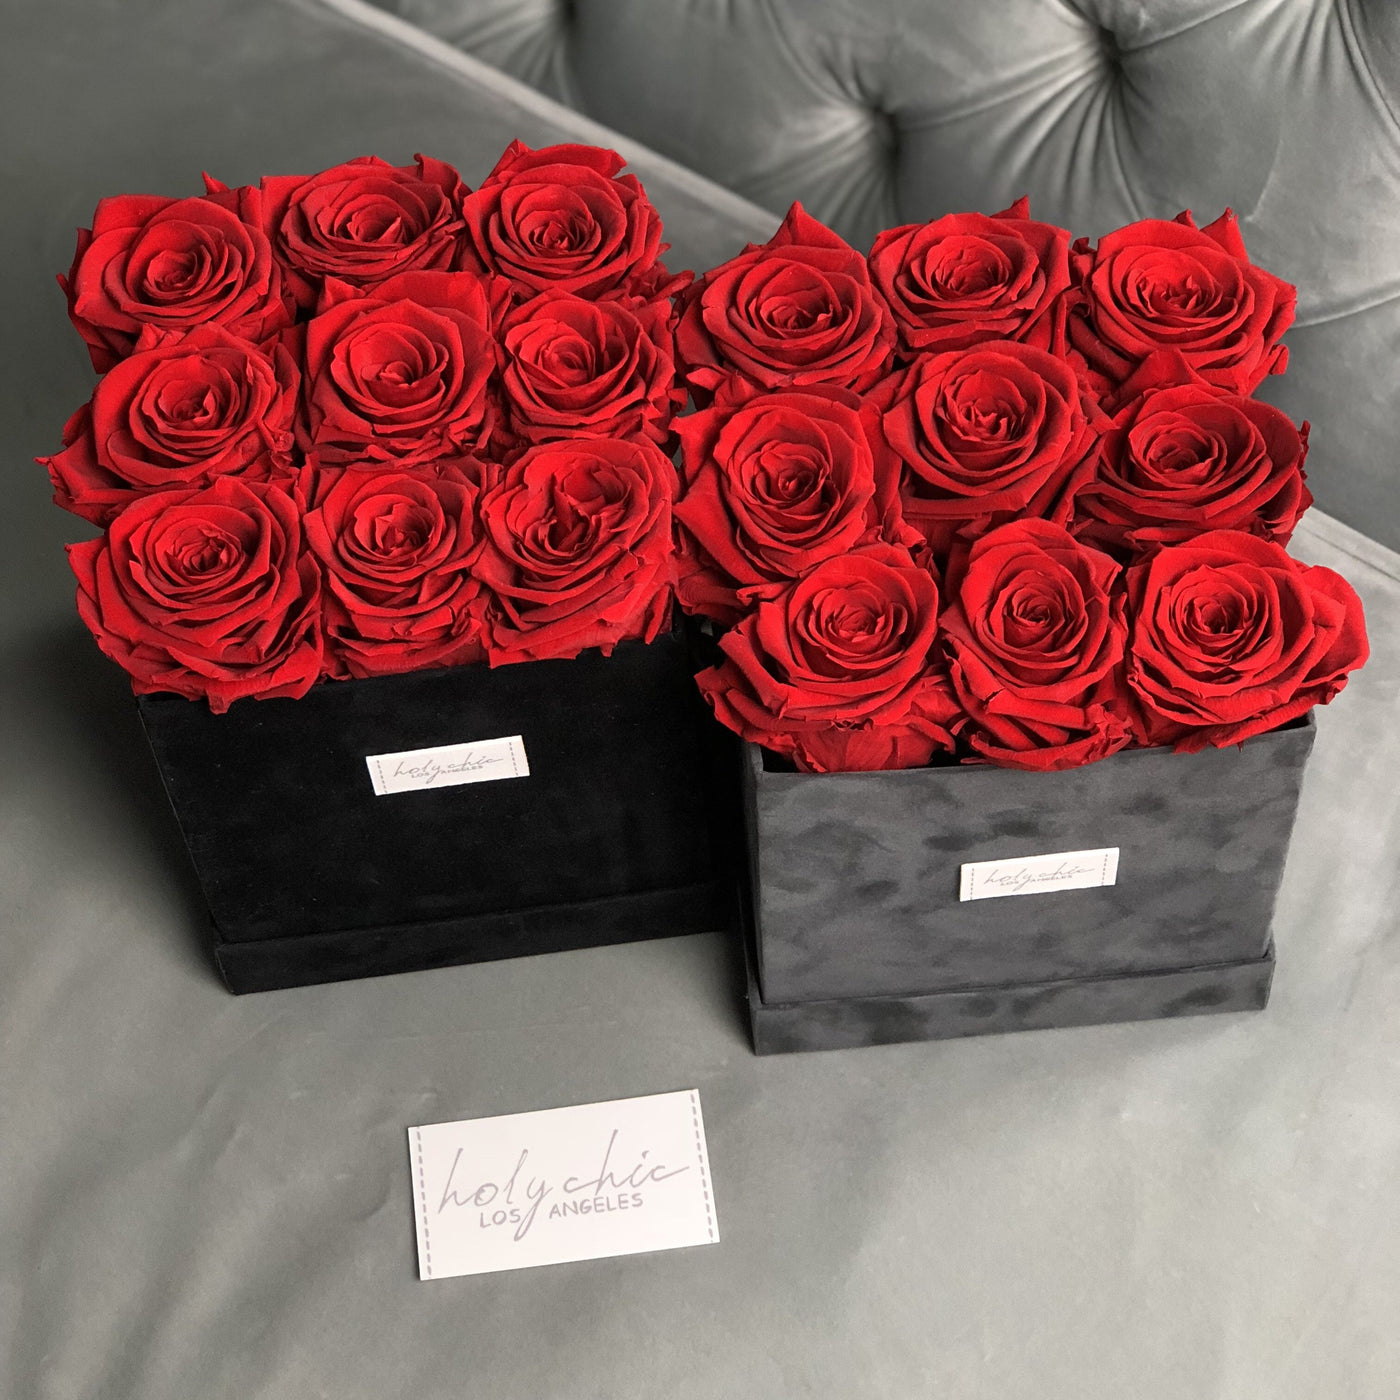 Preserved roses in a square velvet hat box